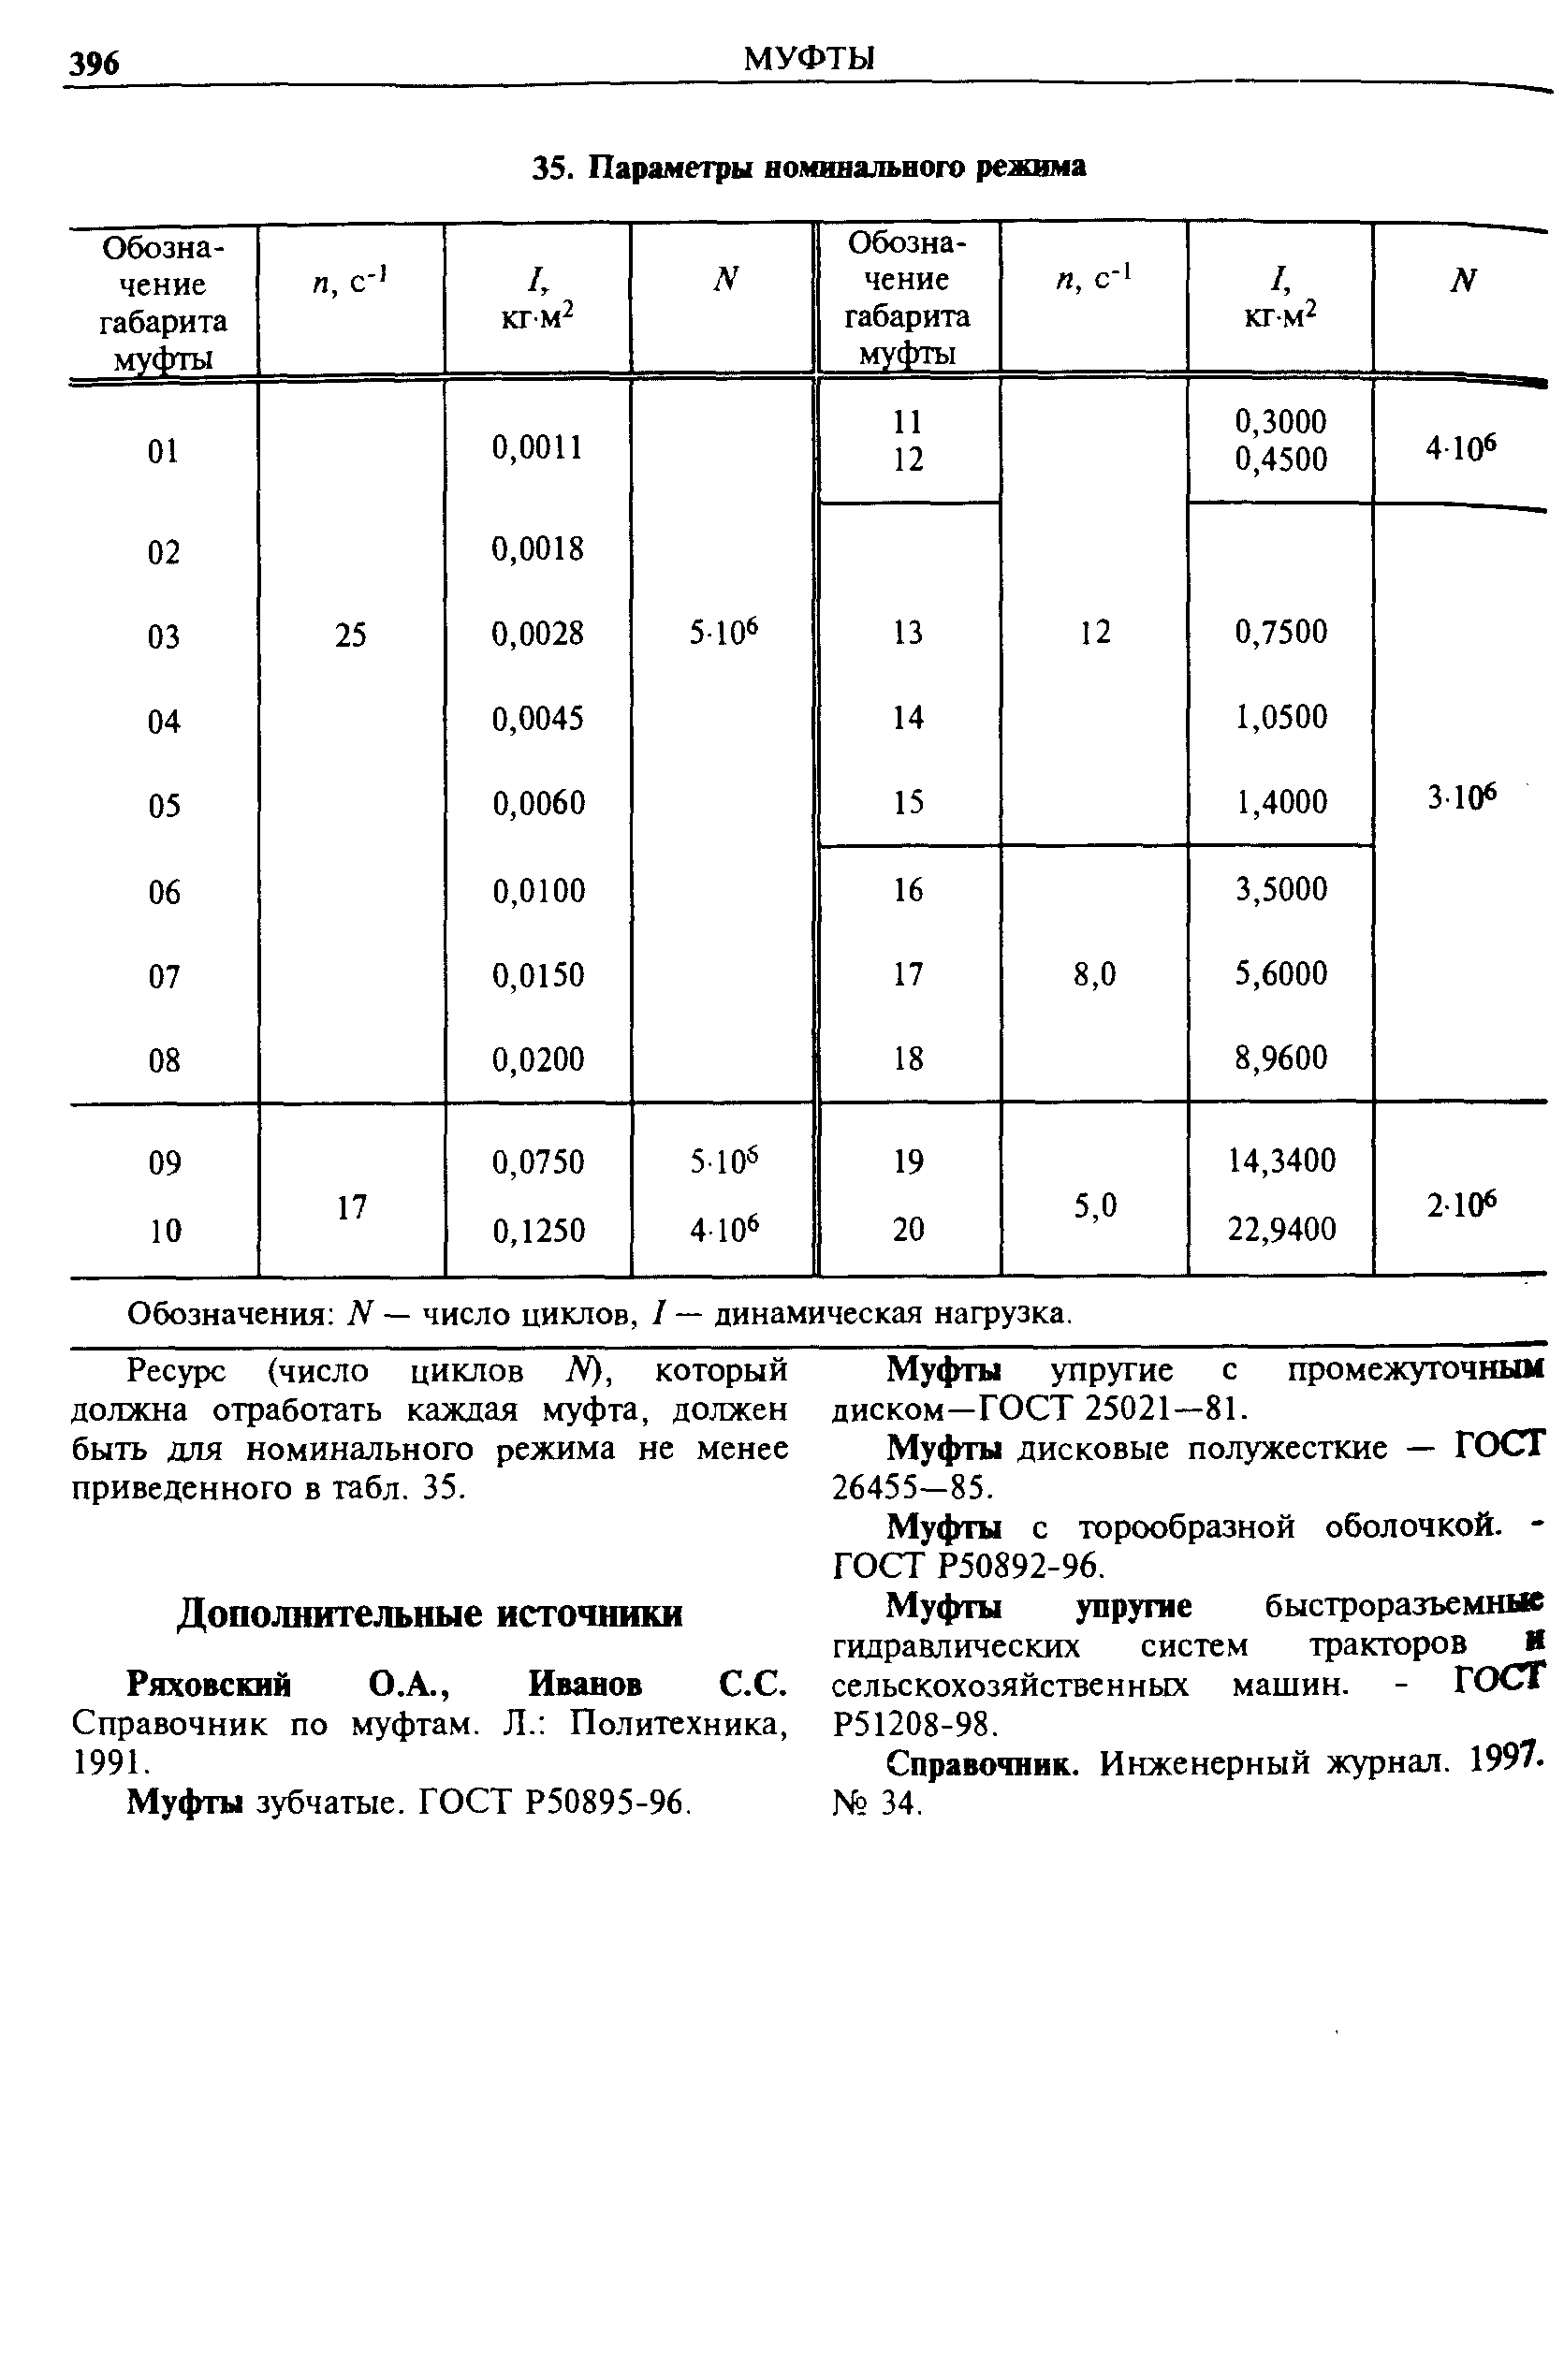 Справочник по муфтам. Л. Политехника, 1991.